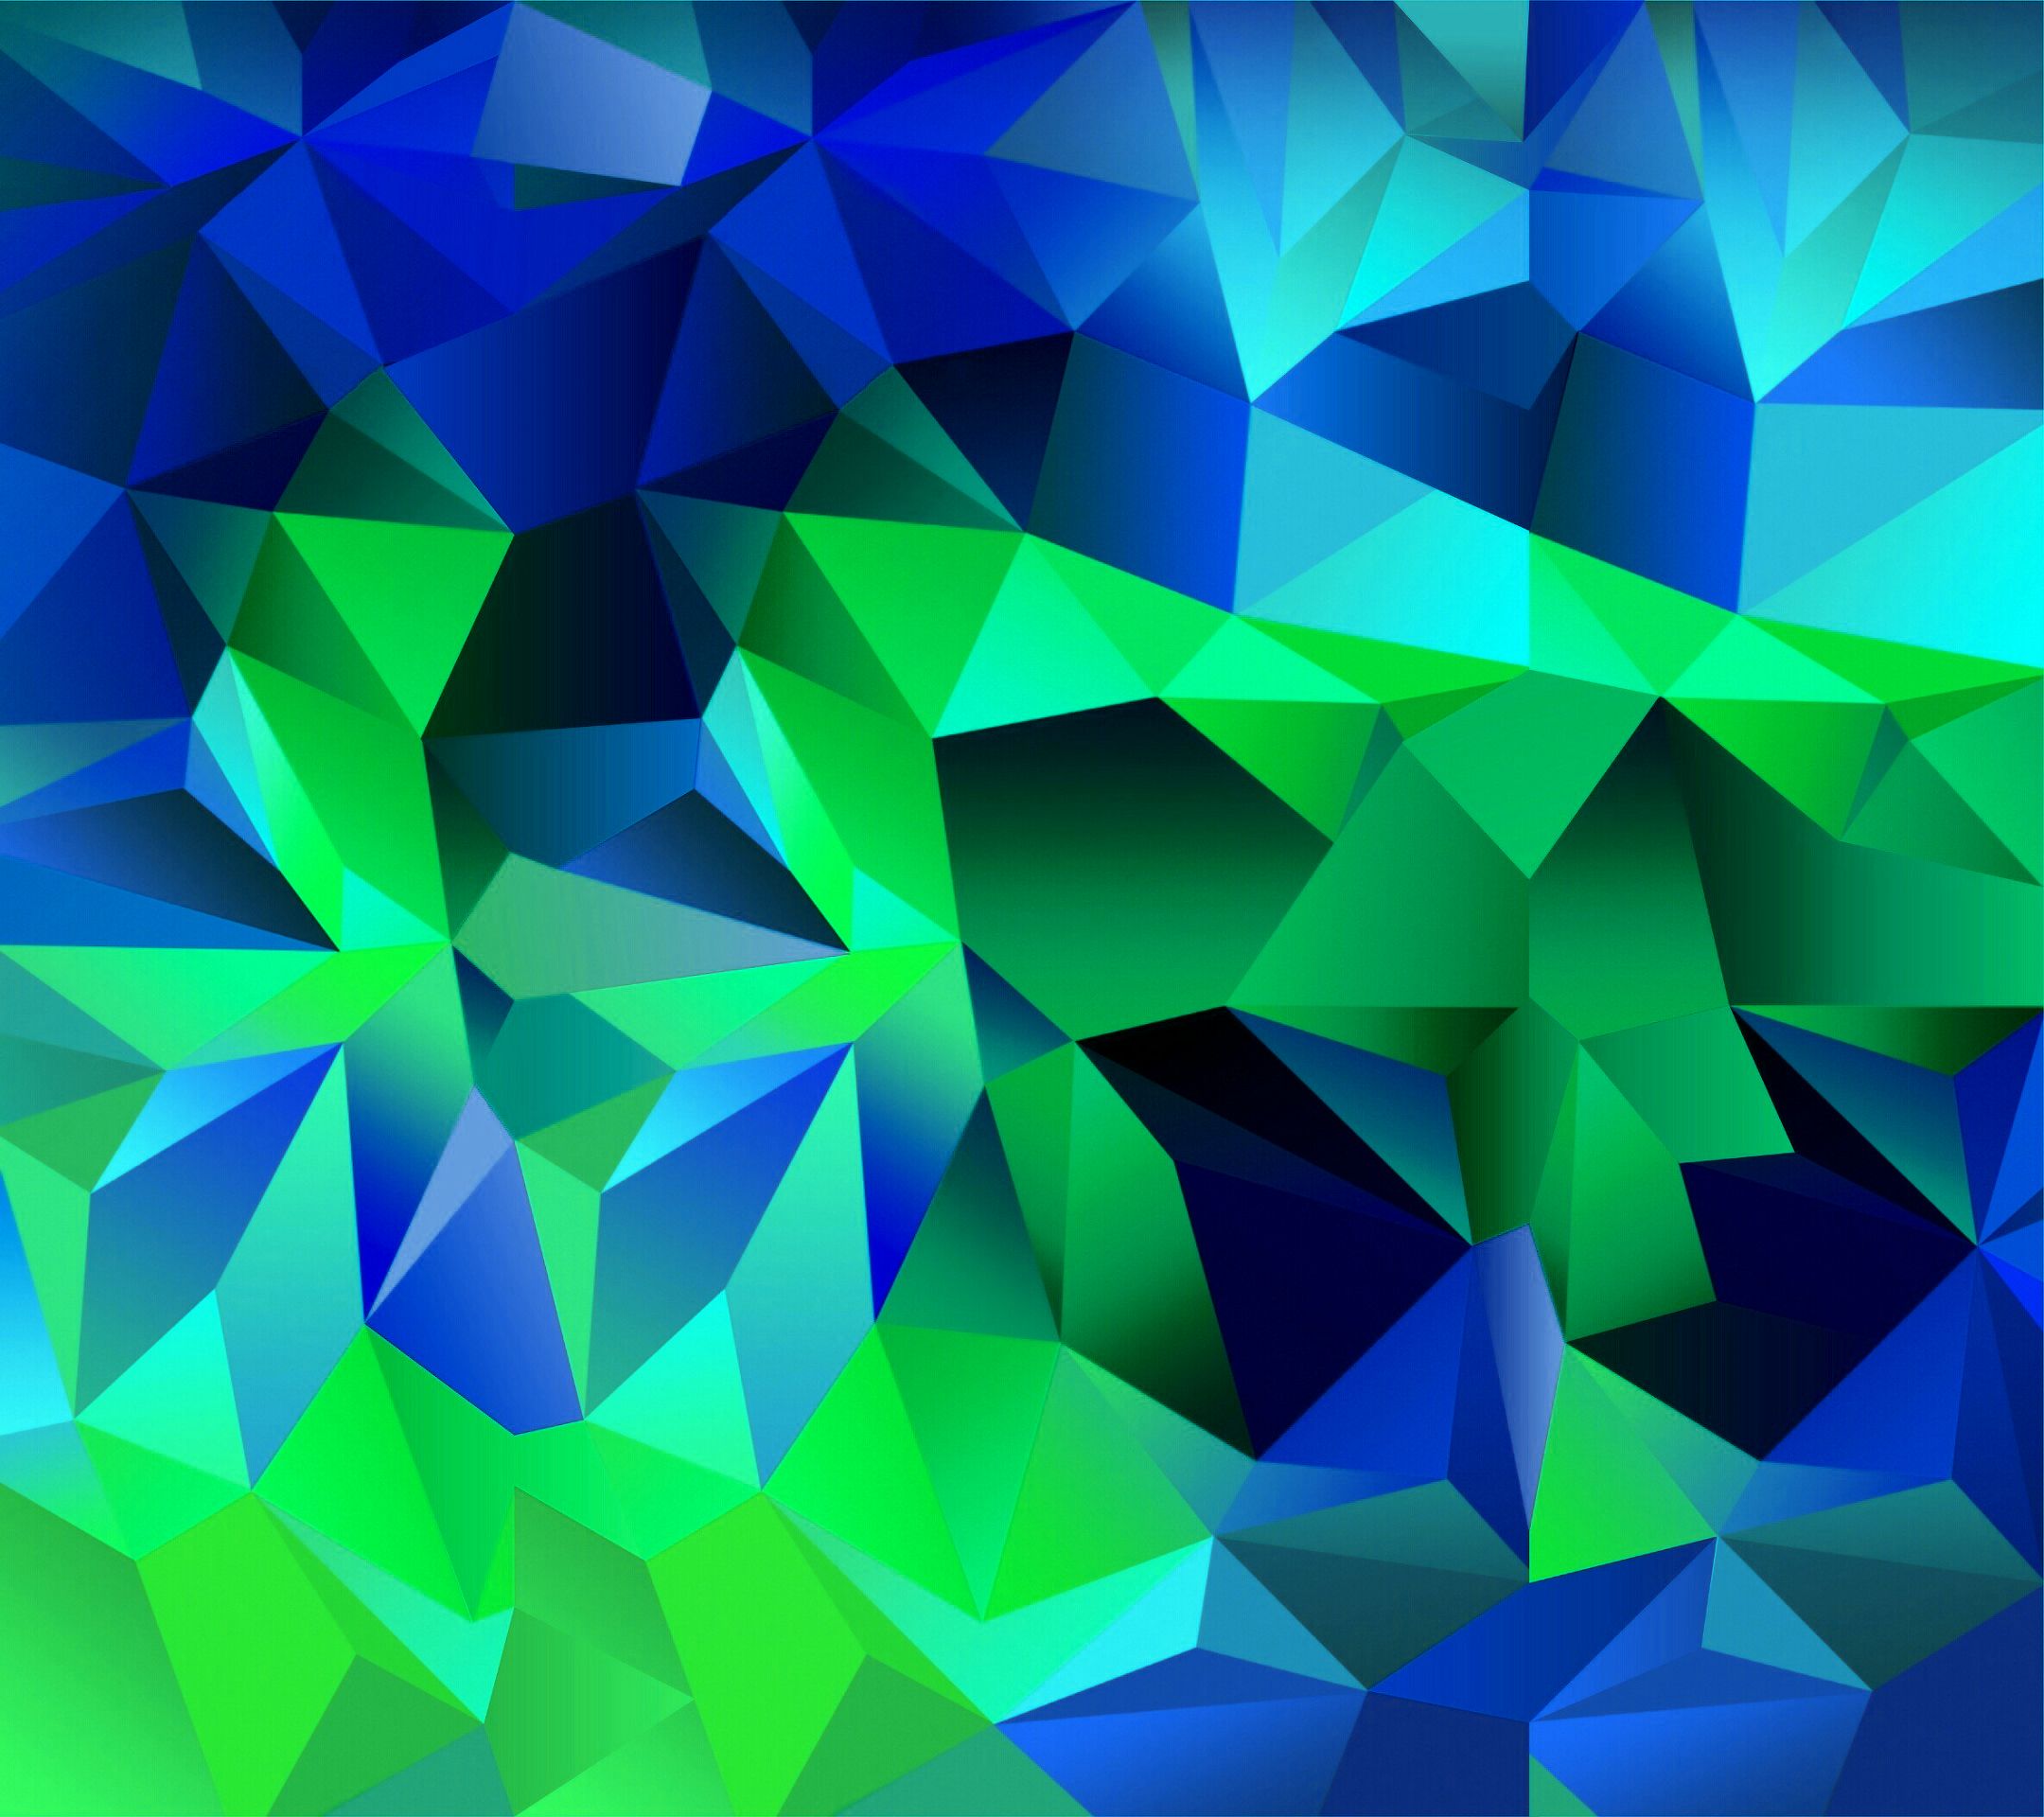 samsung galaxy s5 live wallpaper,blue,green,pattern,design,symmetry